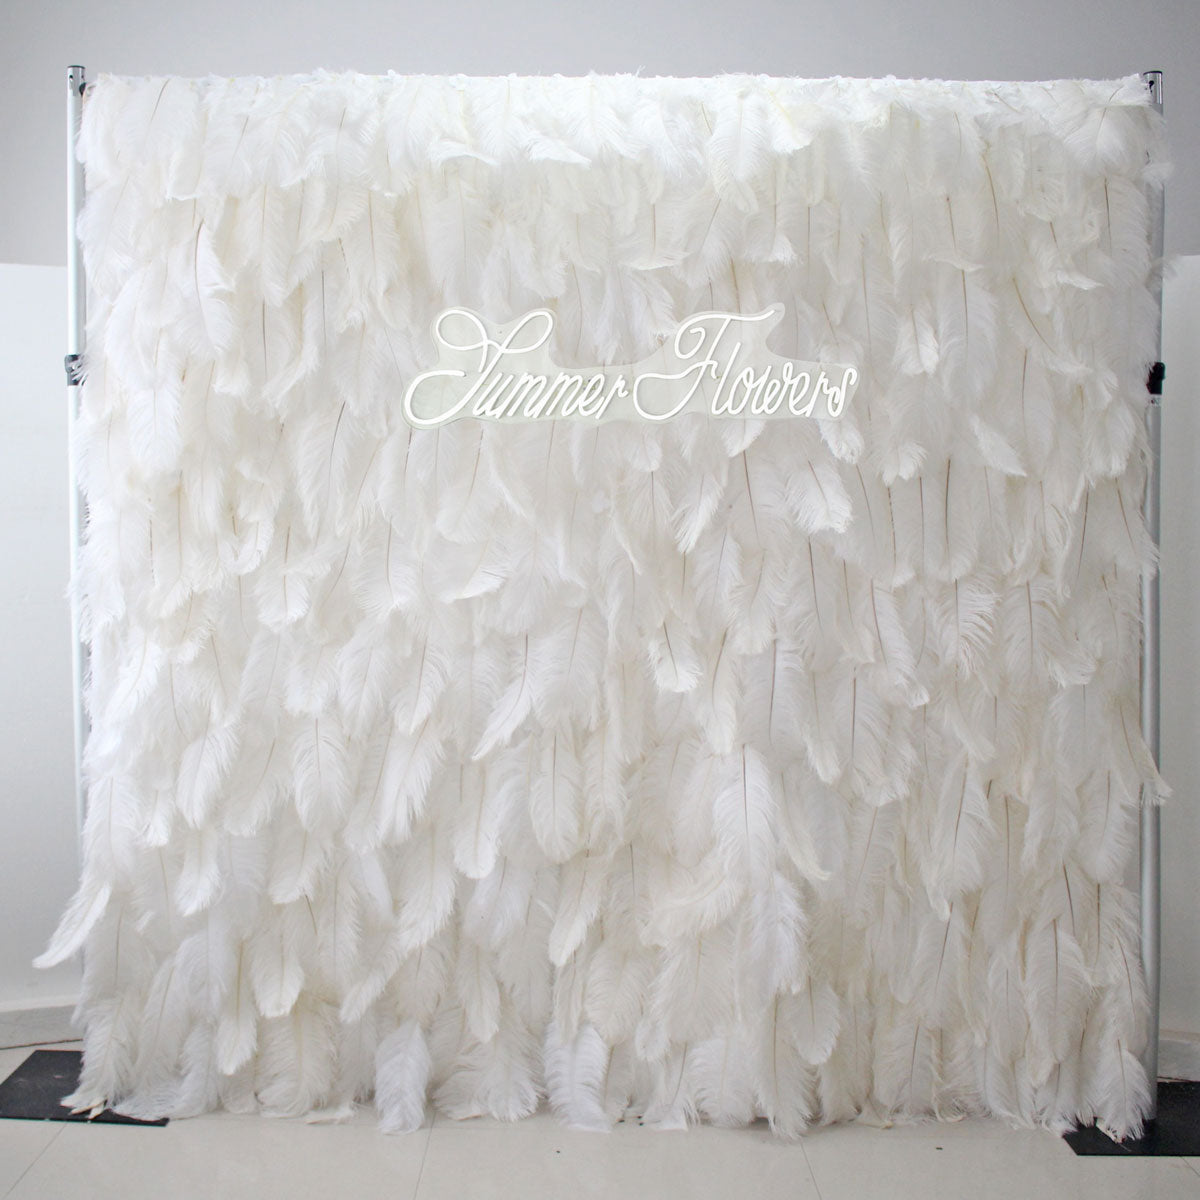 Summer Flower:CB-164 8ft*8ft Cloth Back Artificial Flower Wall Backdrop